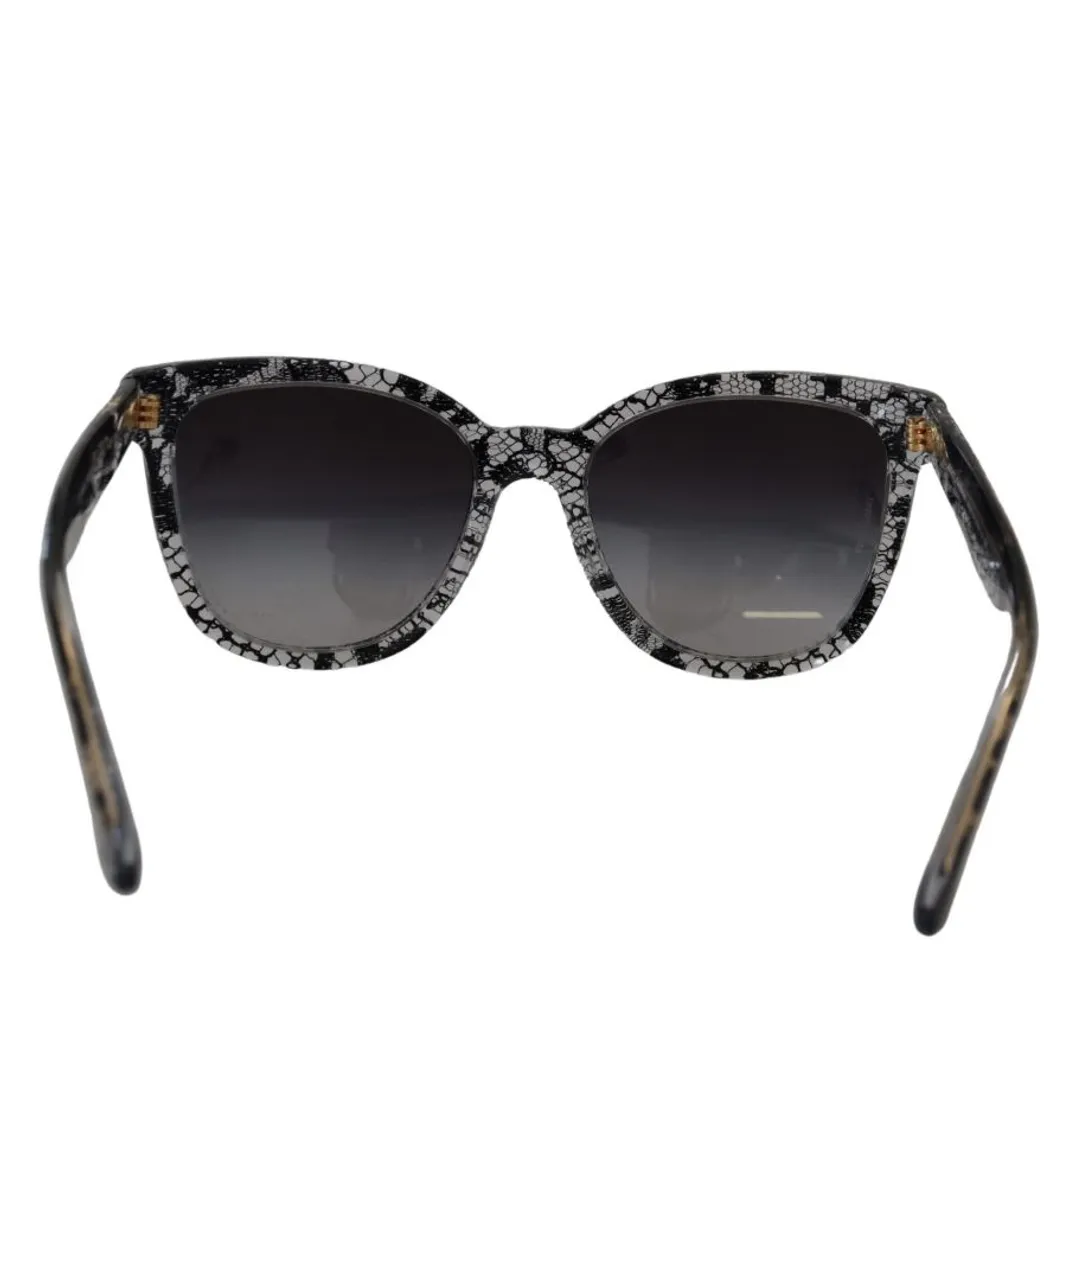 Dolce & Gabbana Womens Lace Acetate Frame Shades Sunglasses - Black - One